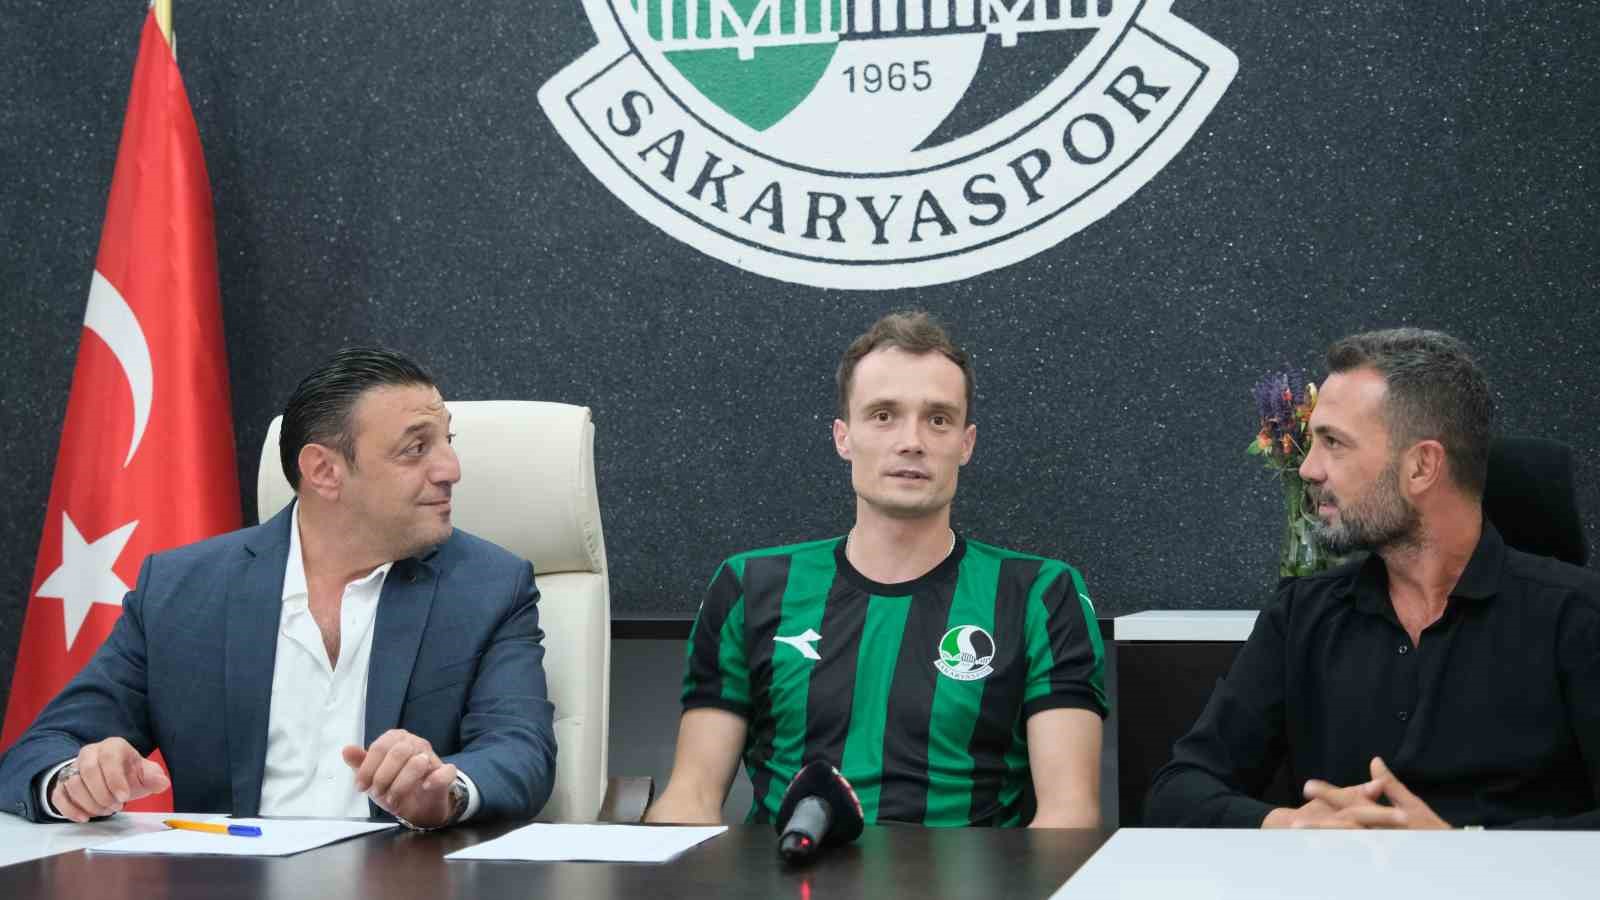 sakaryaspor polonyali kaleci szumskiyi transfer etti 0 EAVVspmK